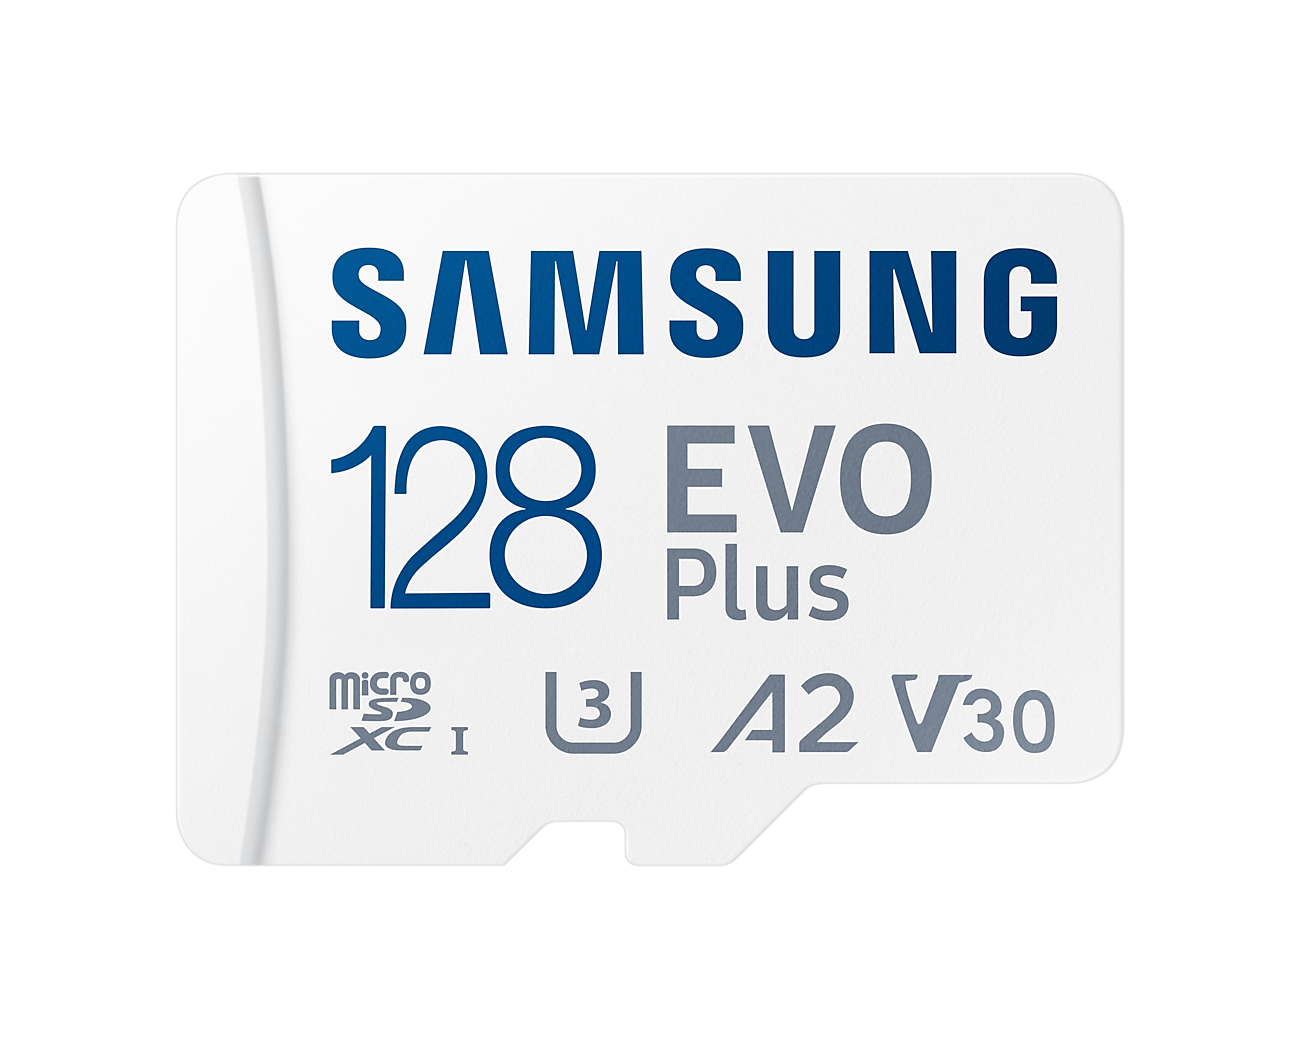 Samsung 128GB EVO Plus microSD Card